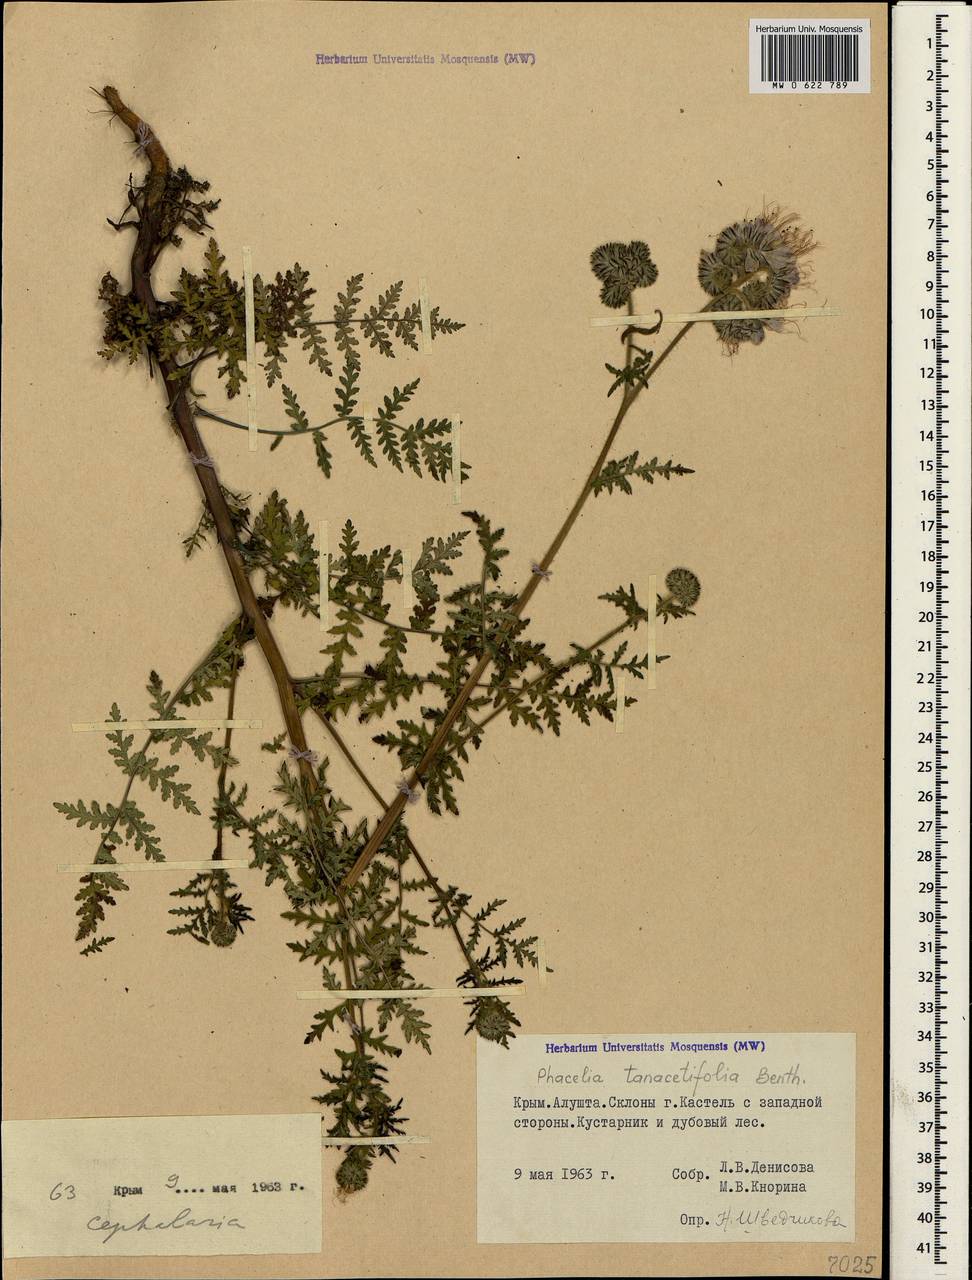 Phacelia tanacetifolia Benth., Crimea (KRYM) (Russia)